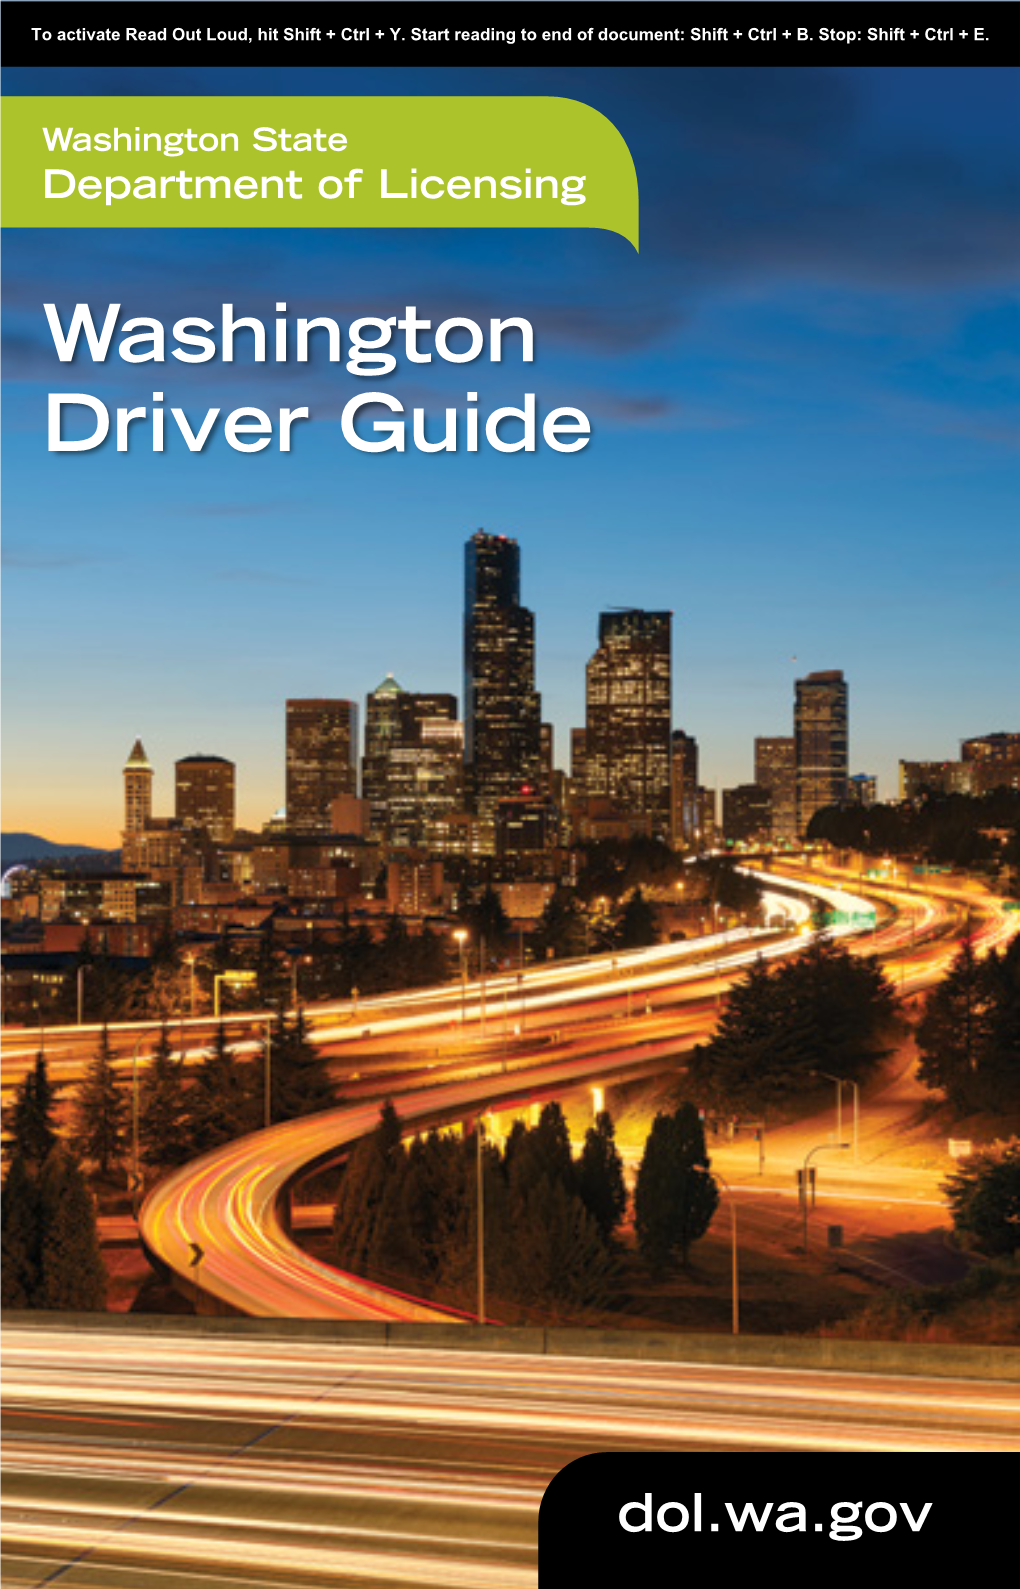 Washington State Drive Guide